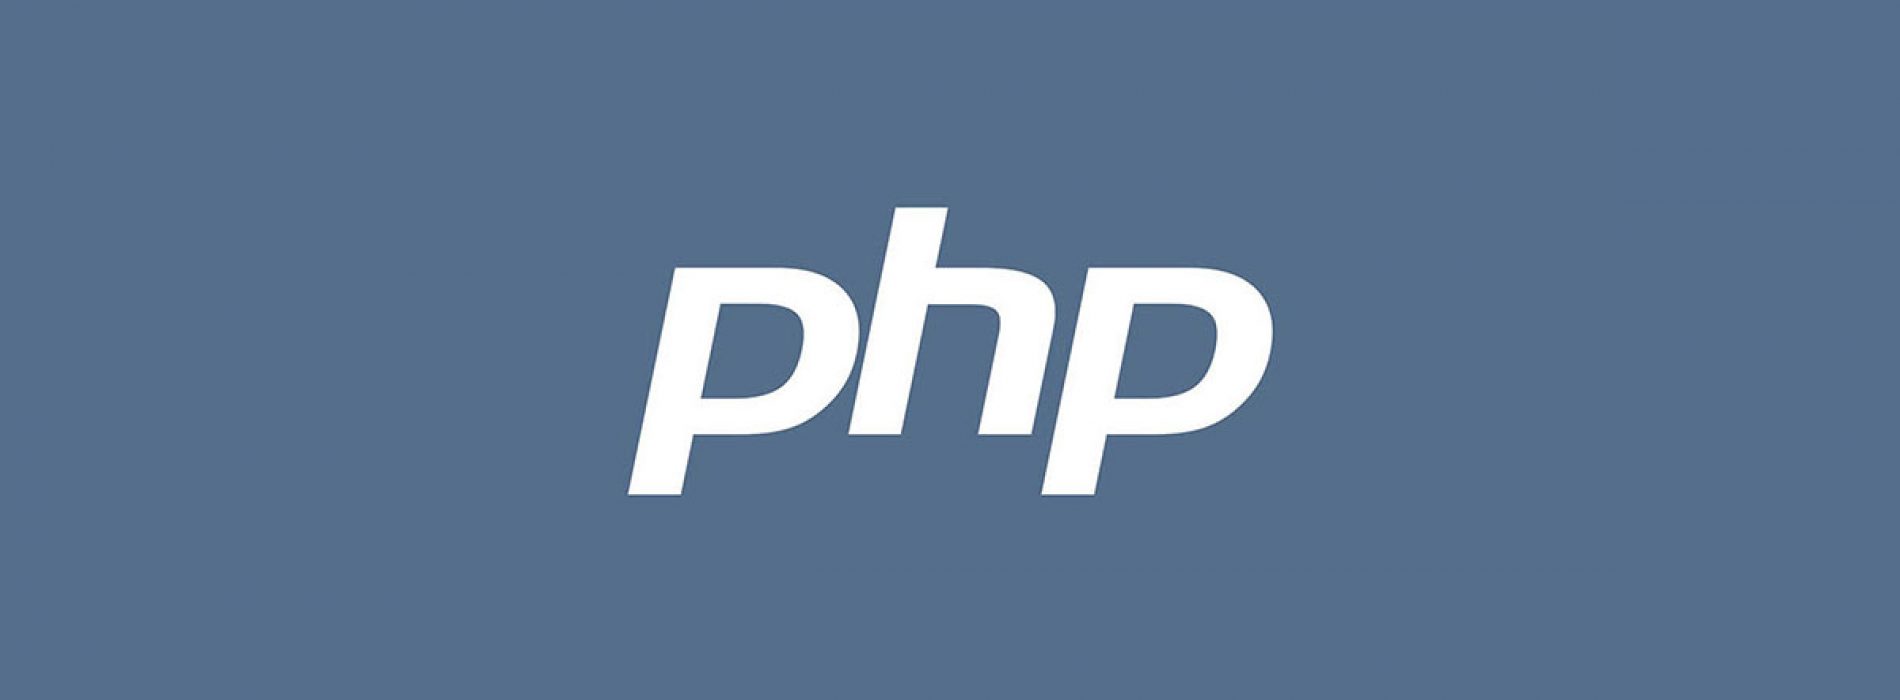 PHP Hesap Makinası Kodu